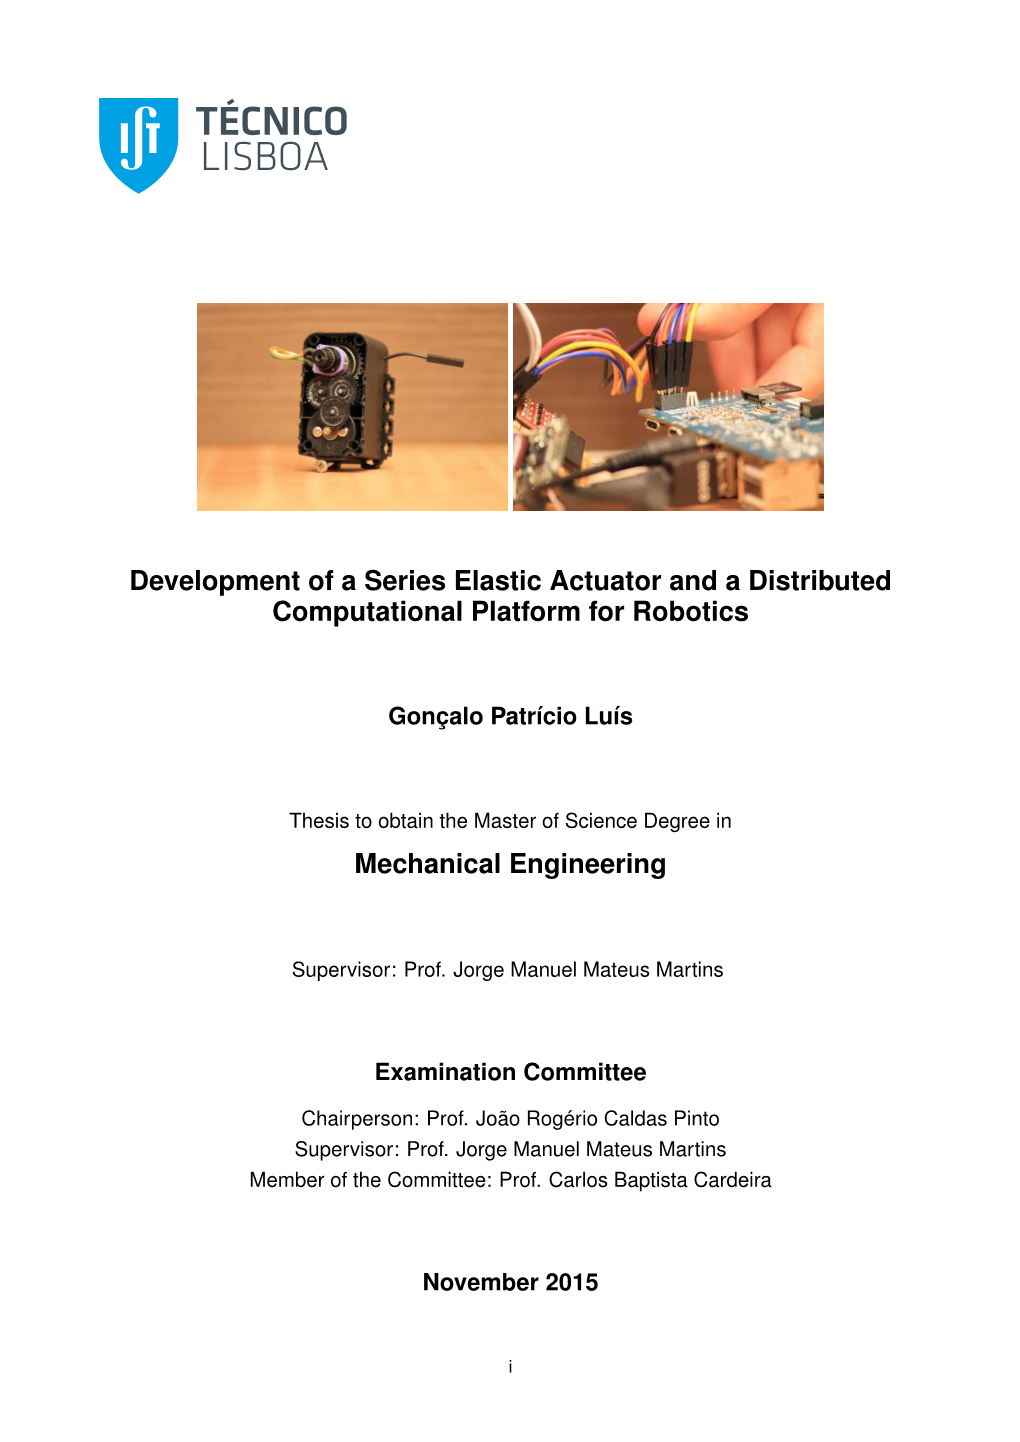 Development of a Series Elastic Actuator and a Distributed Computational Platform for Robotics